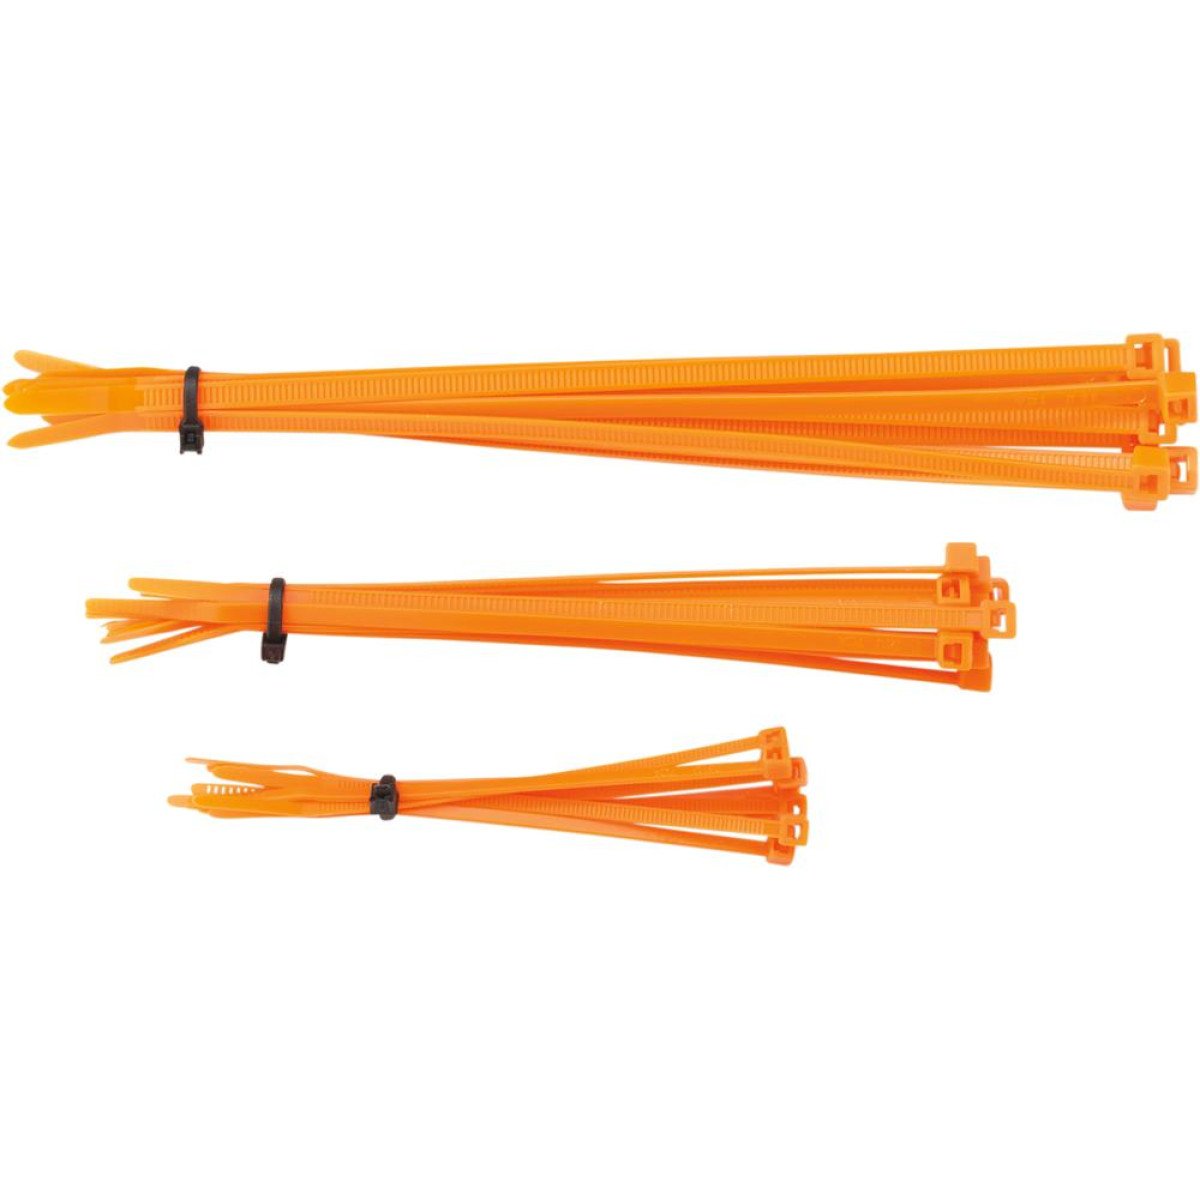 Moose Racing cable ties  30 piece, orange